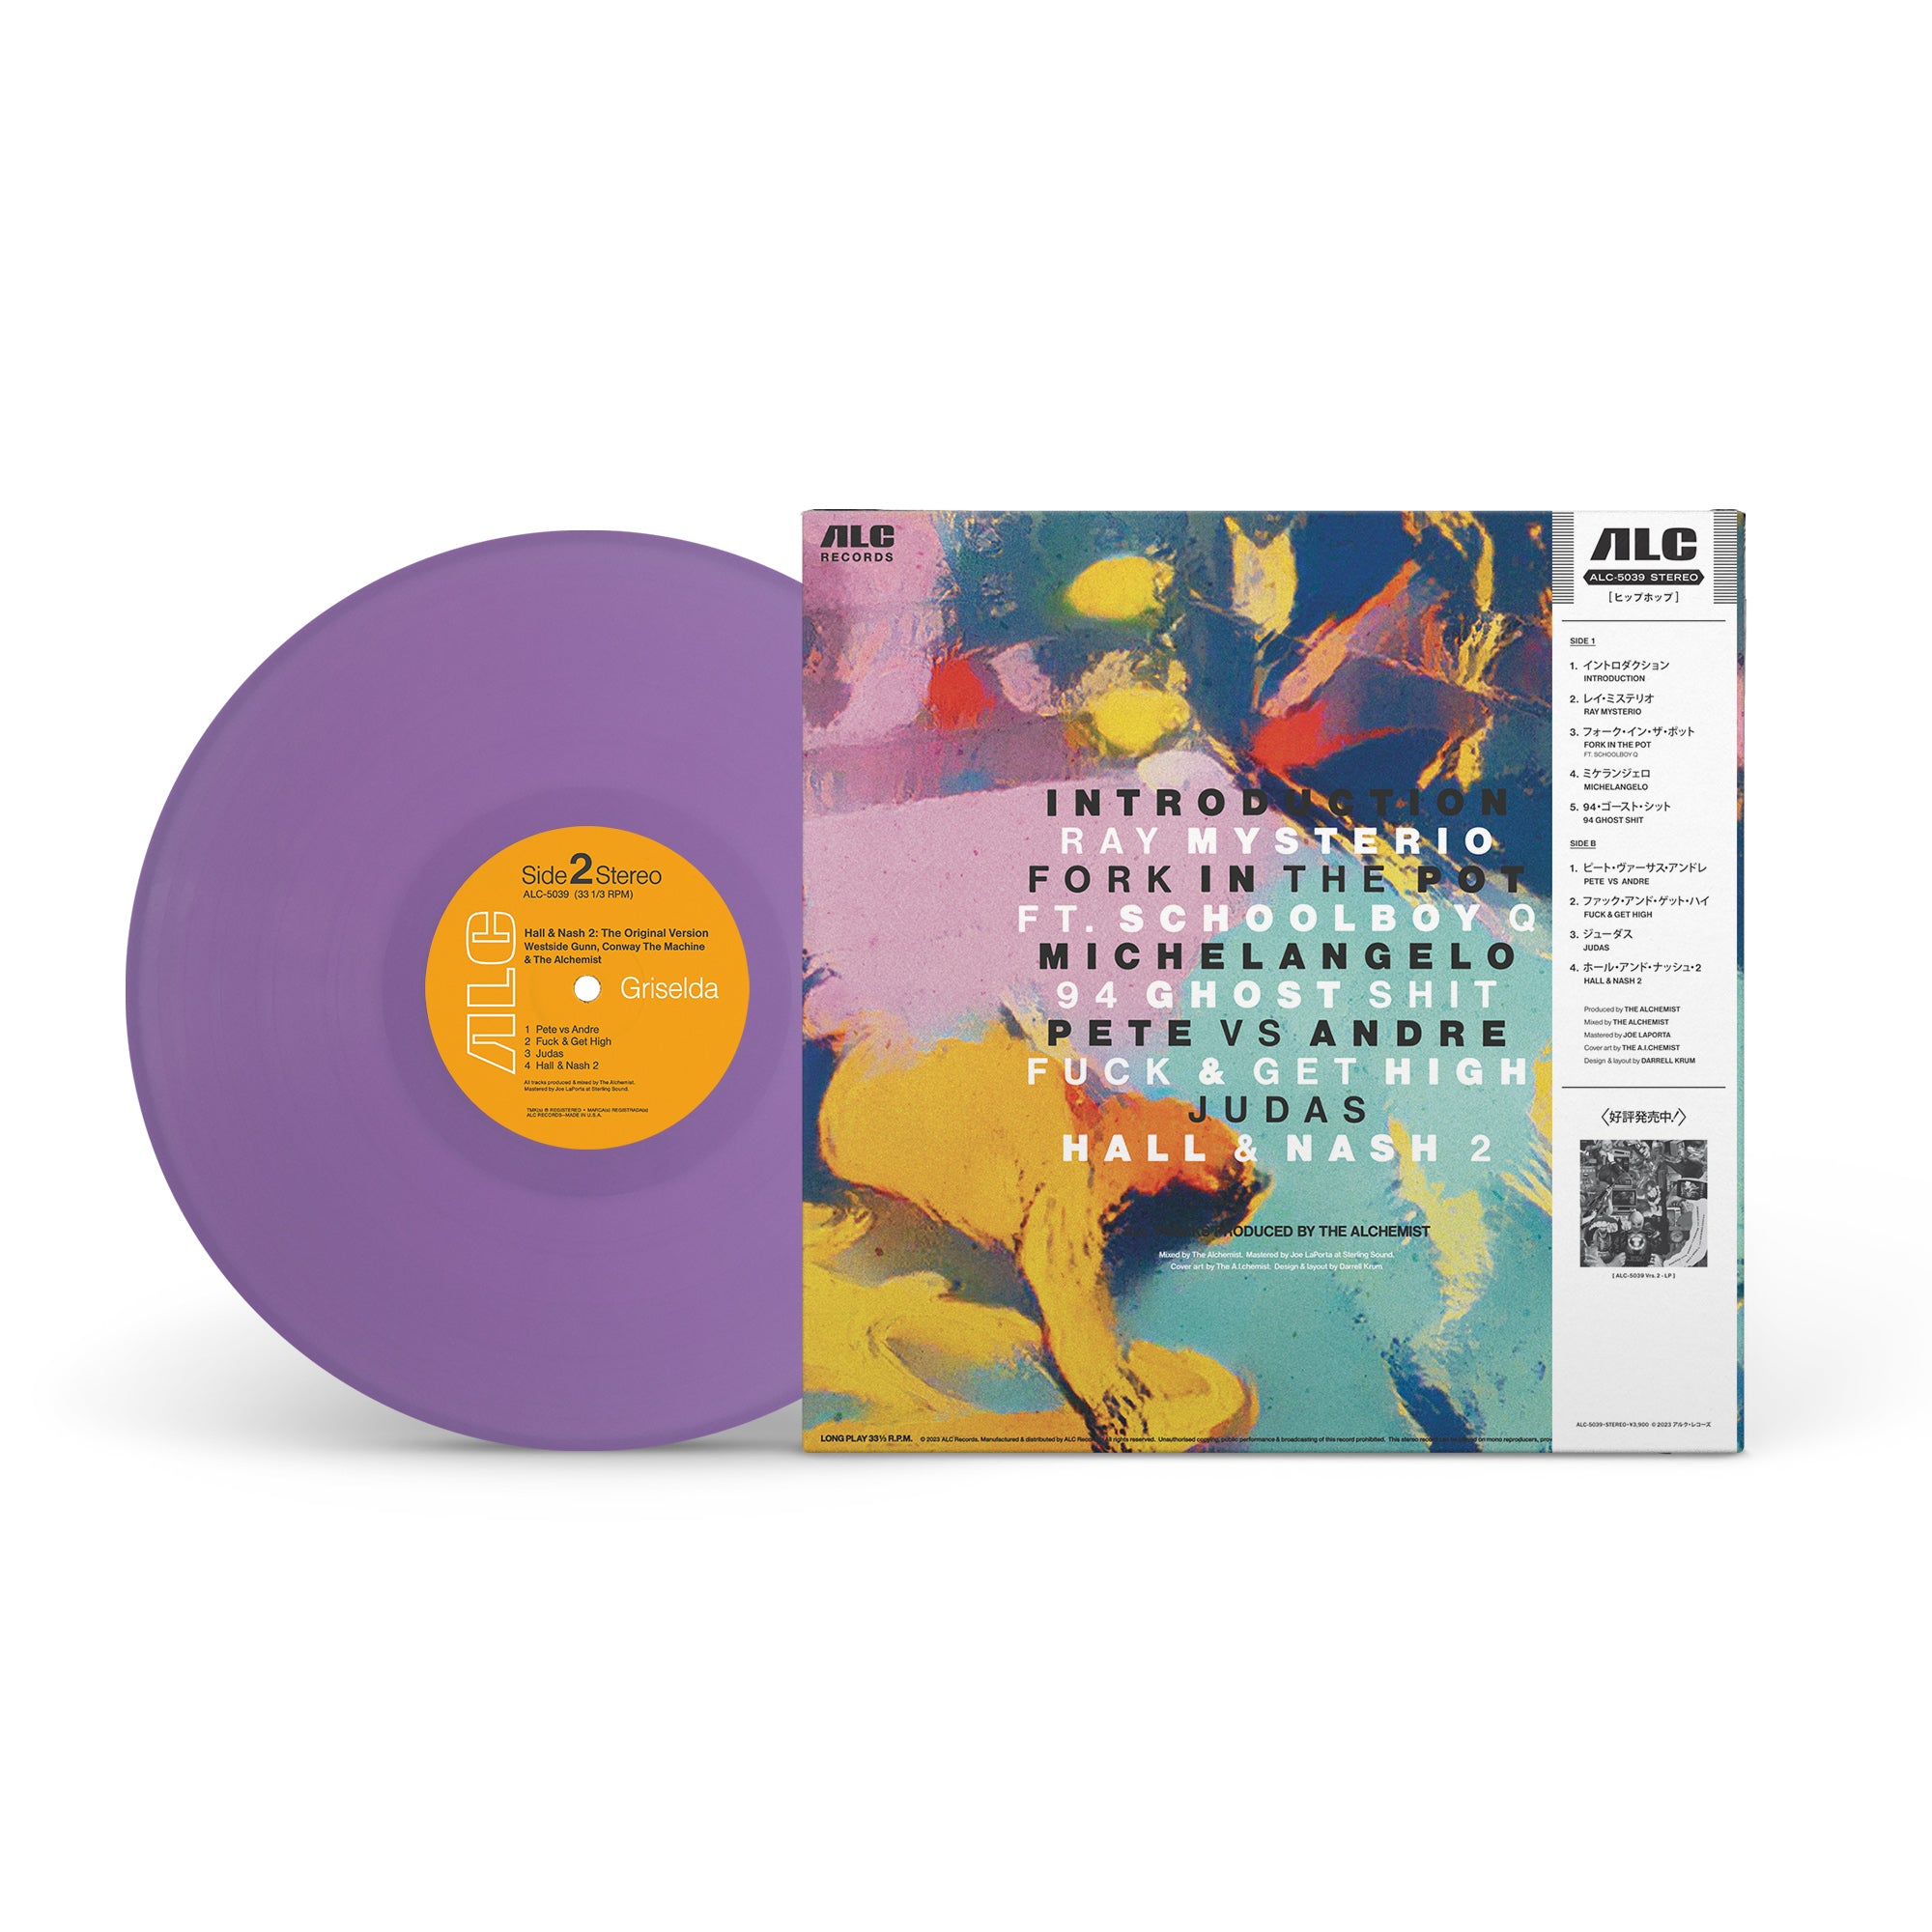 Hall & Nash 2: The Original Version (LP - Purple Vinyl)